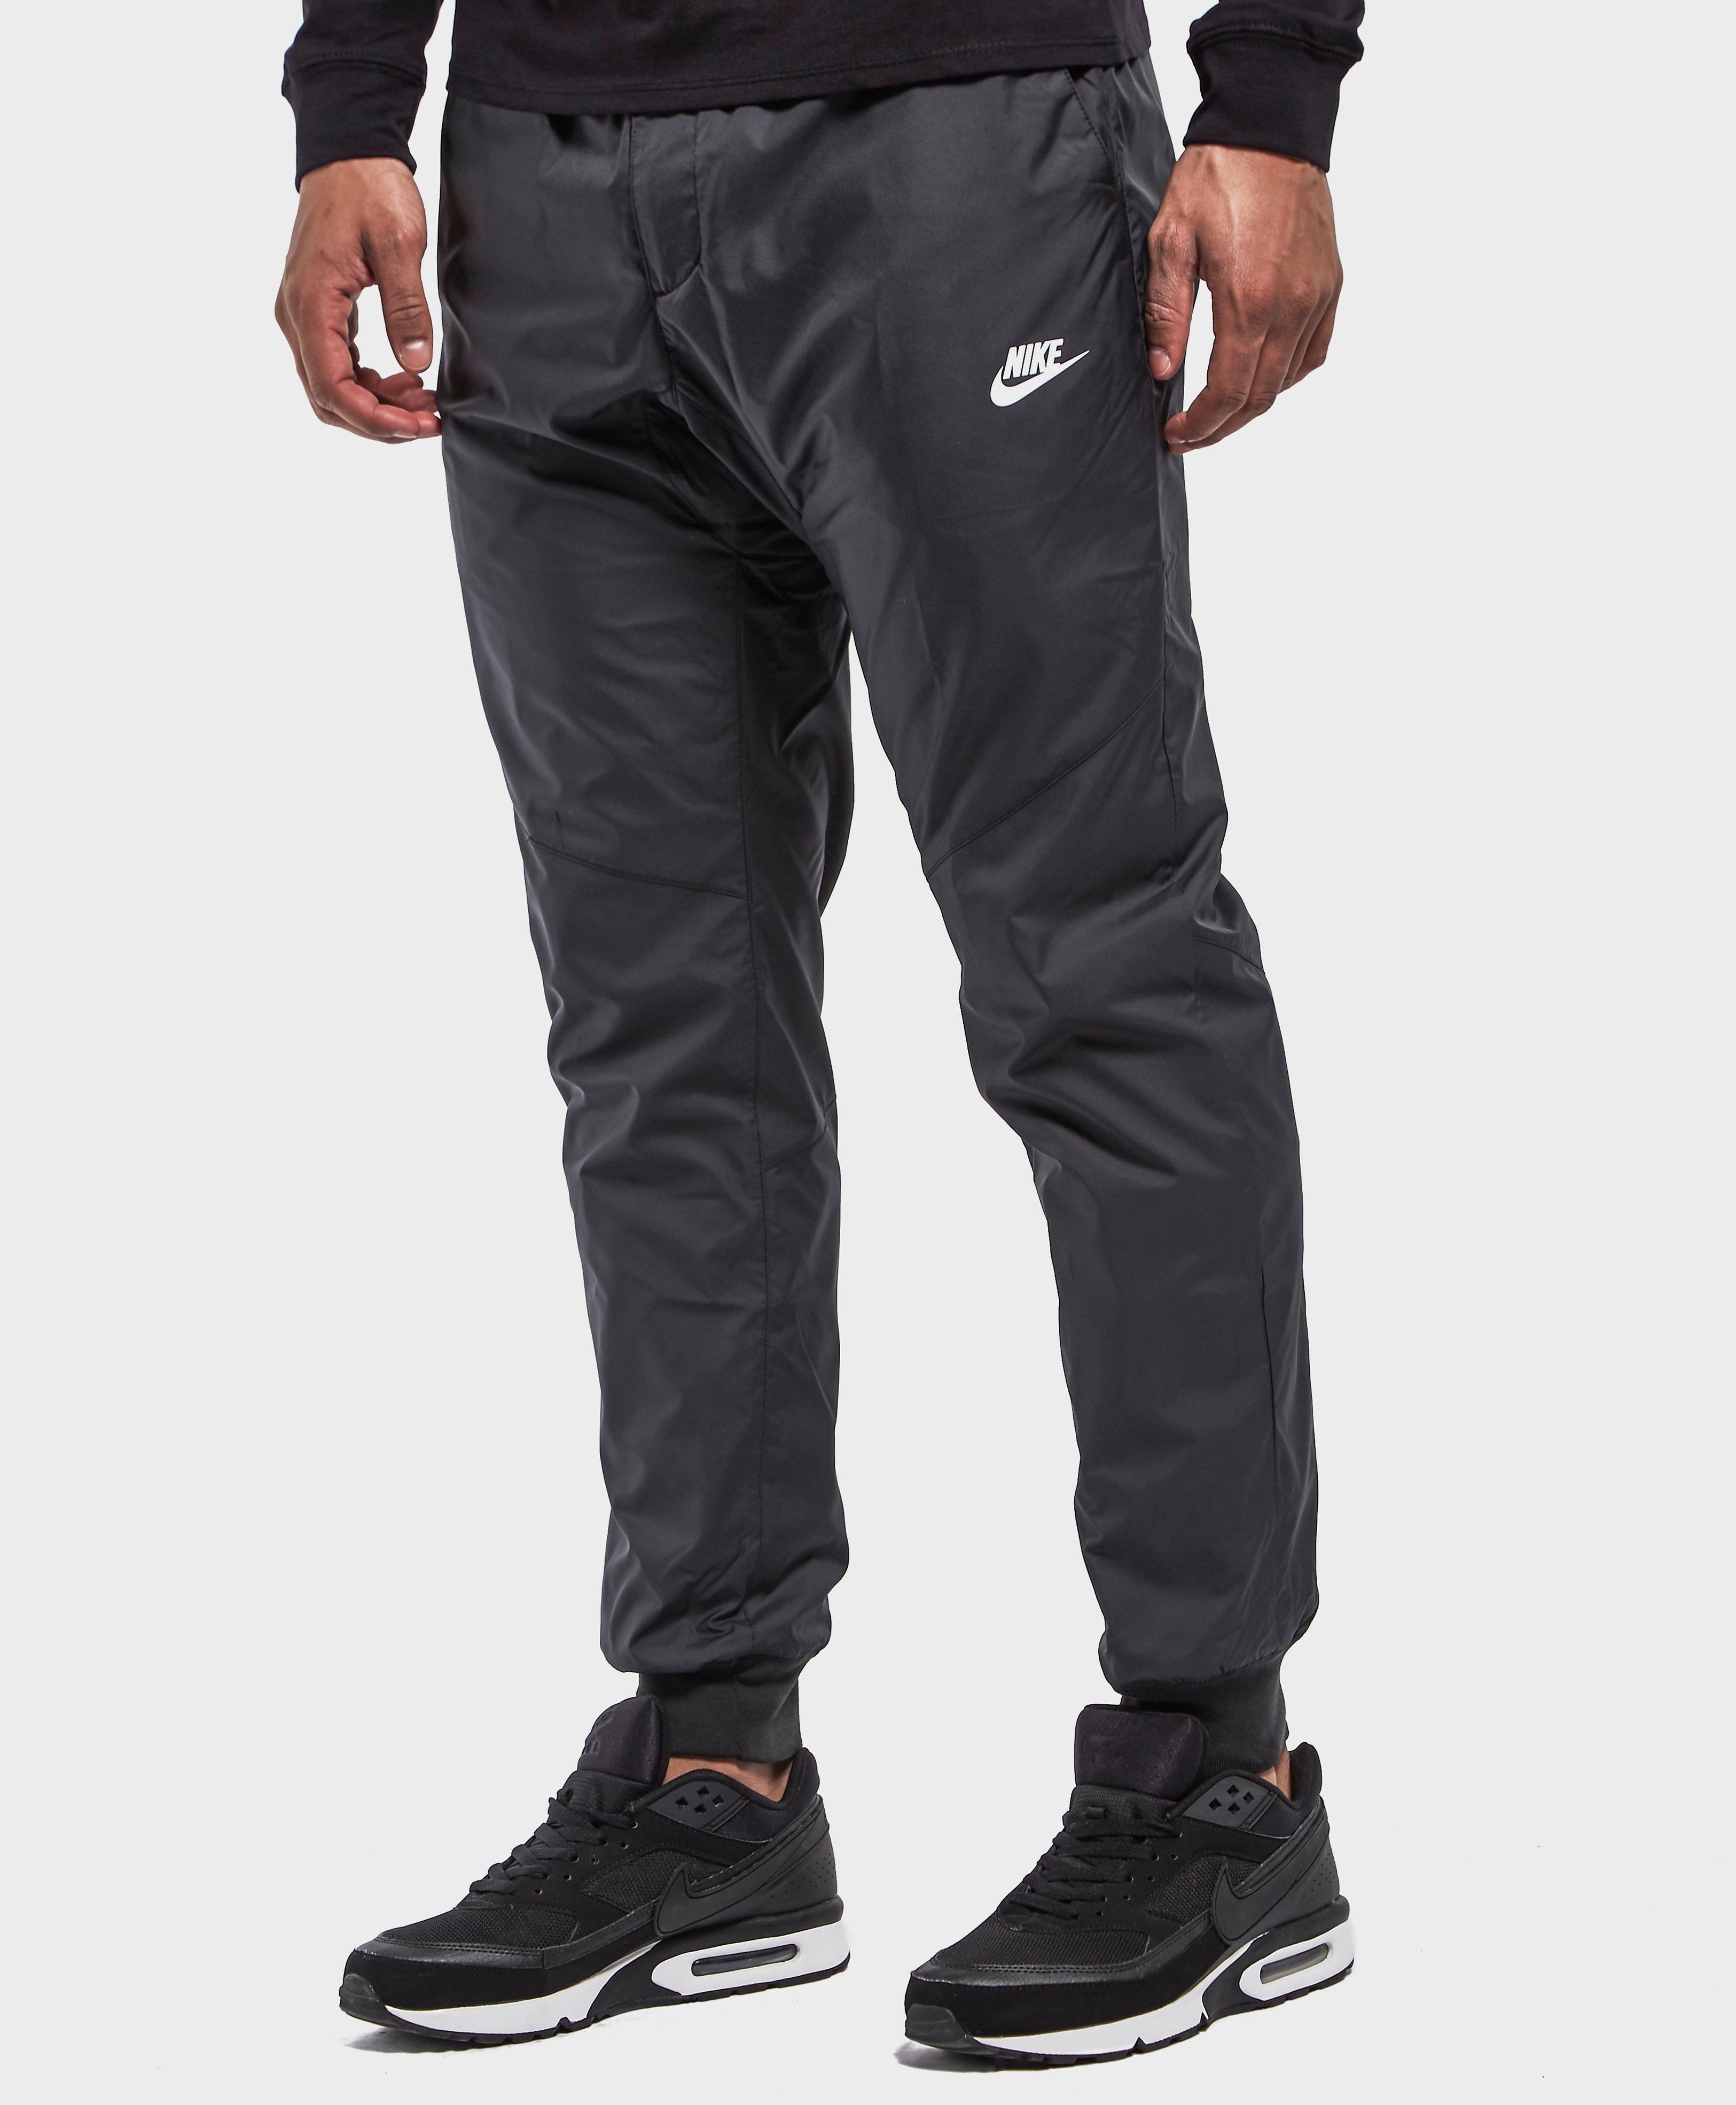 Nike Synthetic Windrunner Track Pant in Black for Men - Lyst